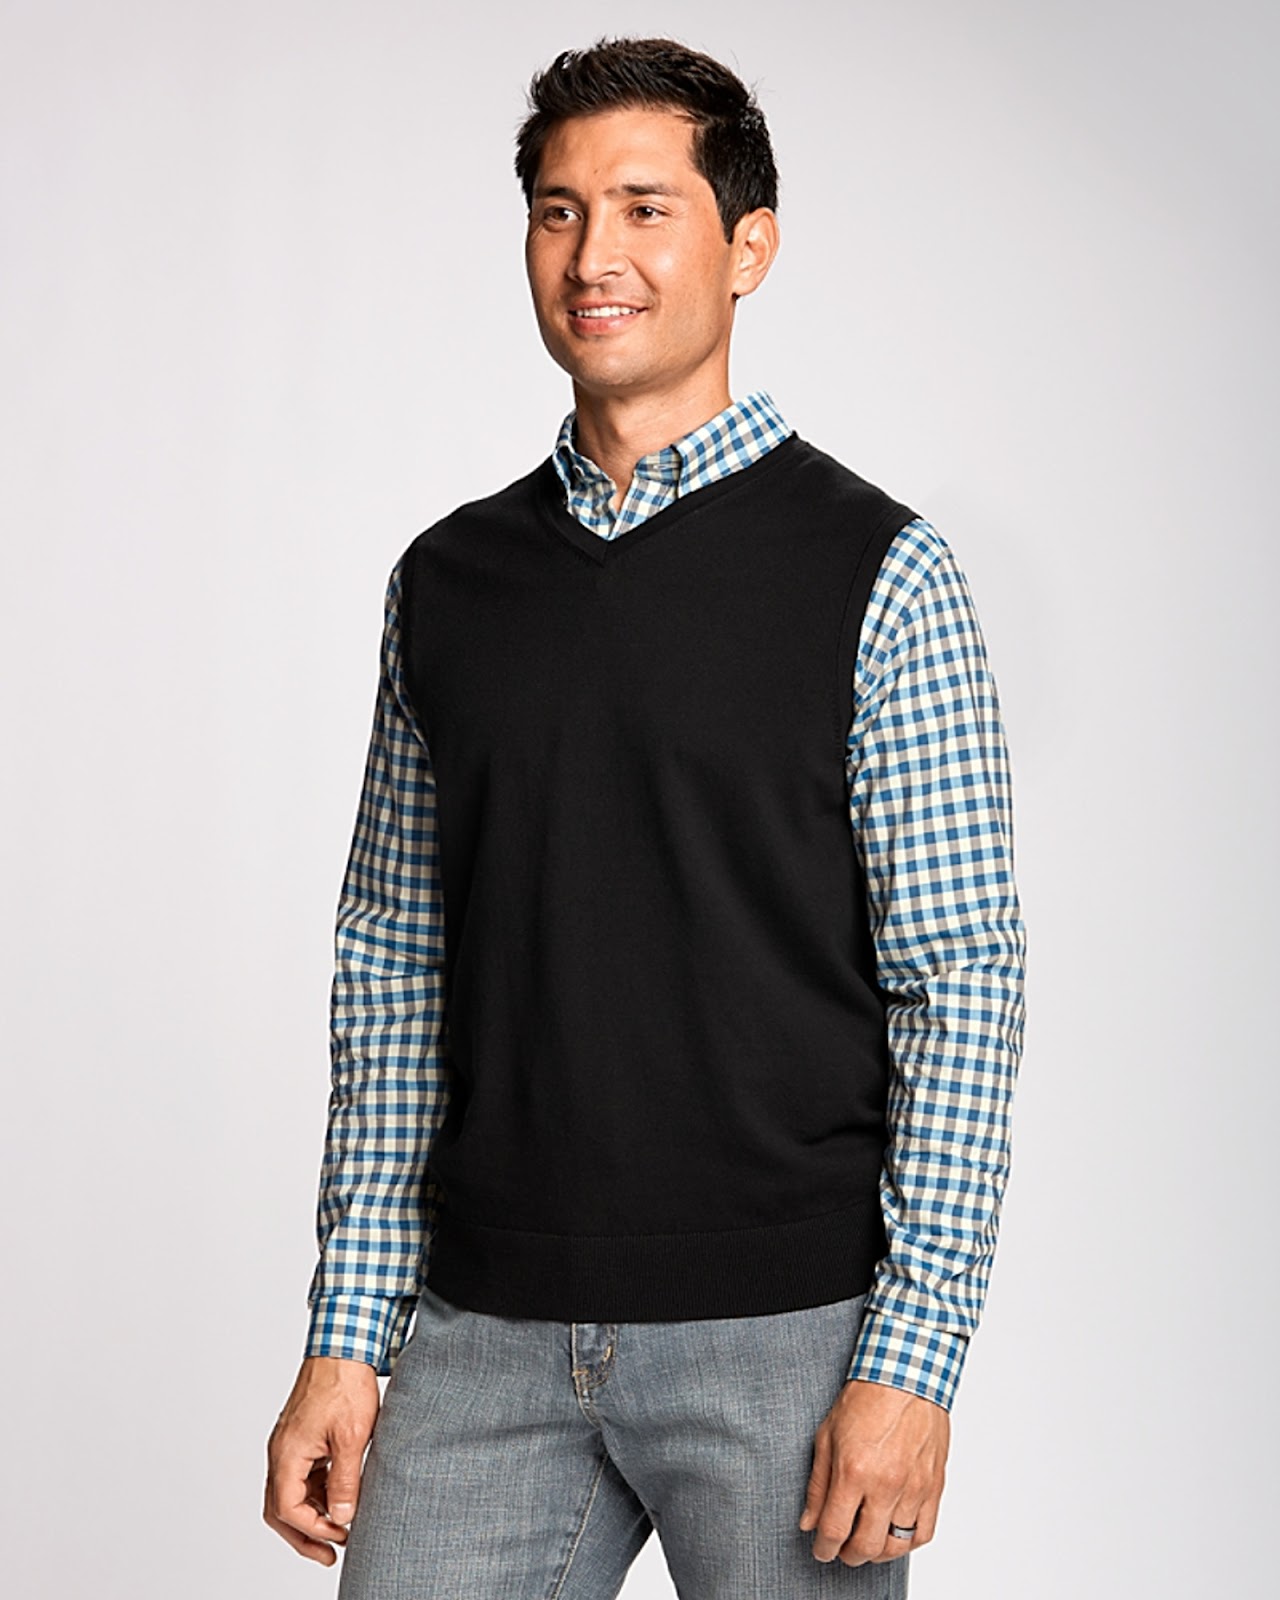 Cutter & Buck Lakemont Sweater Vest